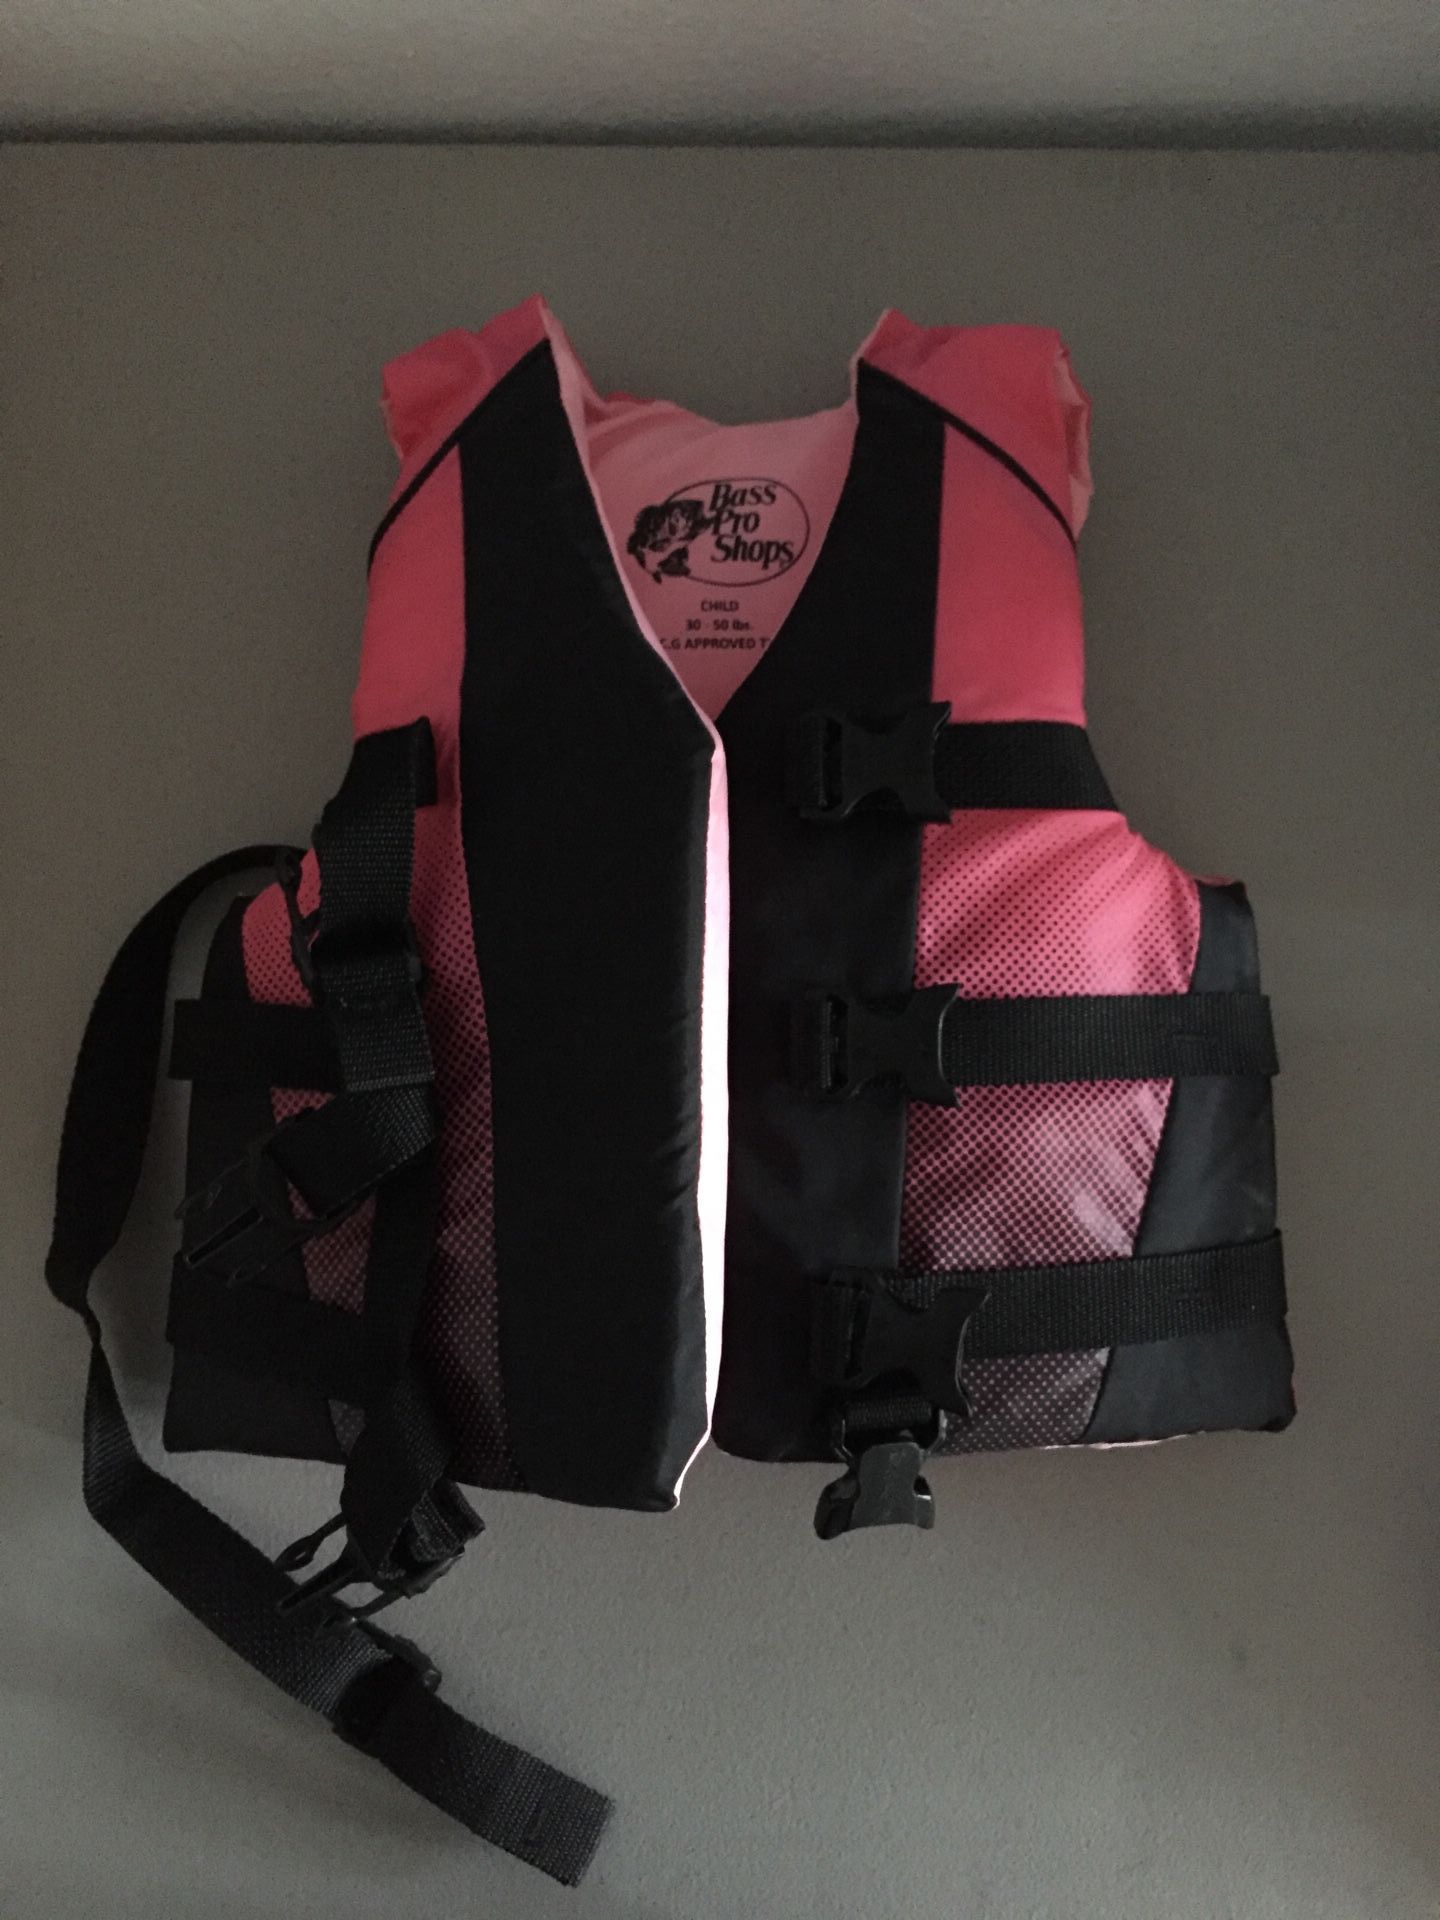 Child’s life jacket 30-50 Lbs - Like New